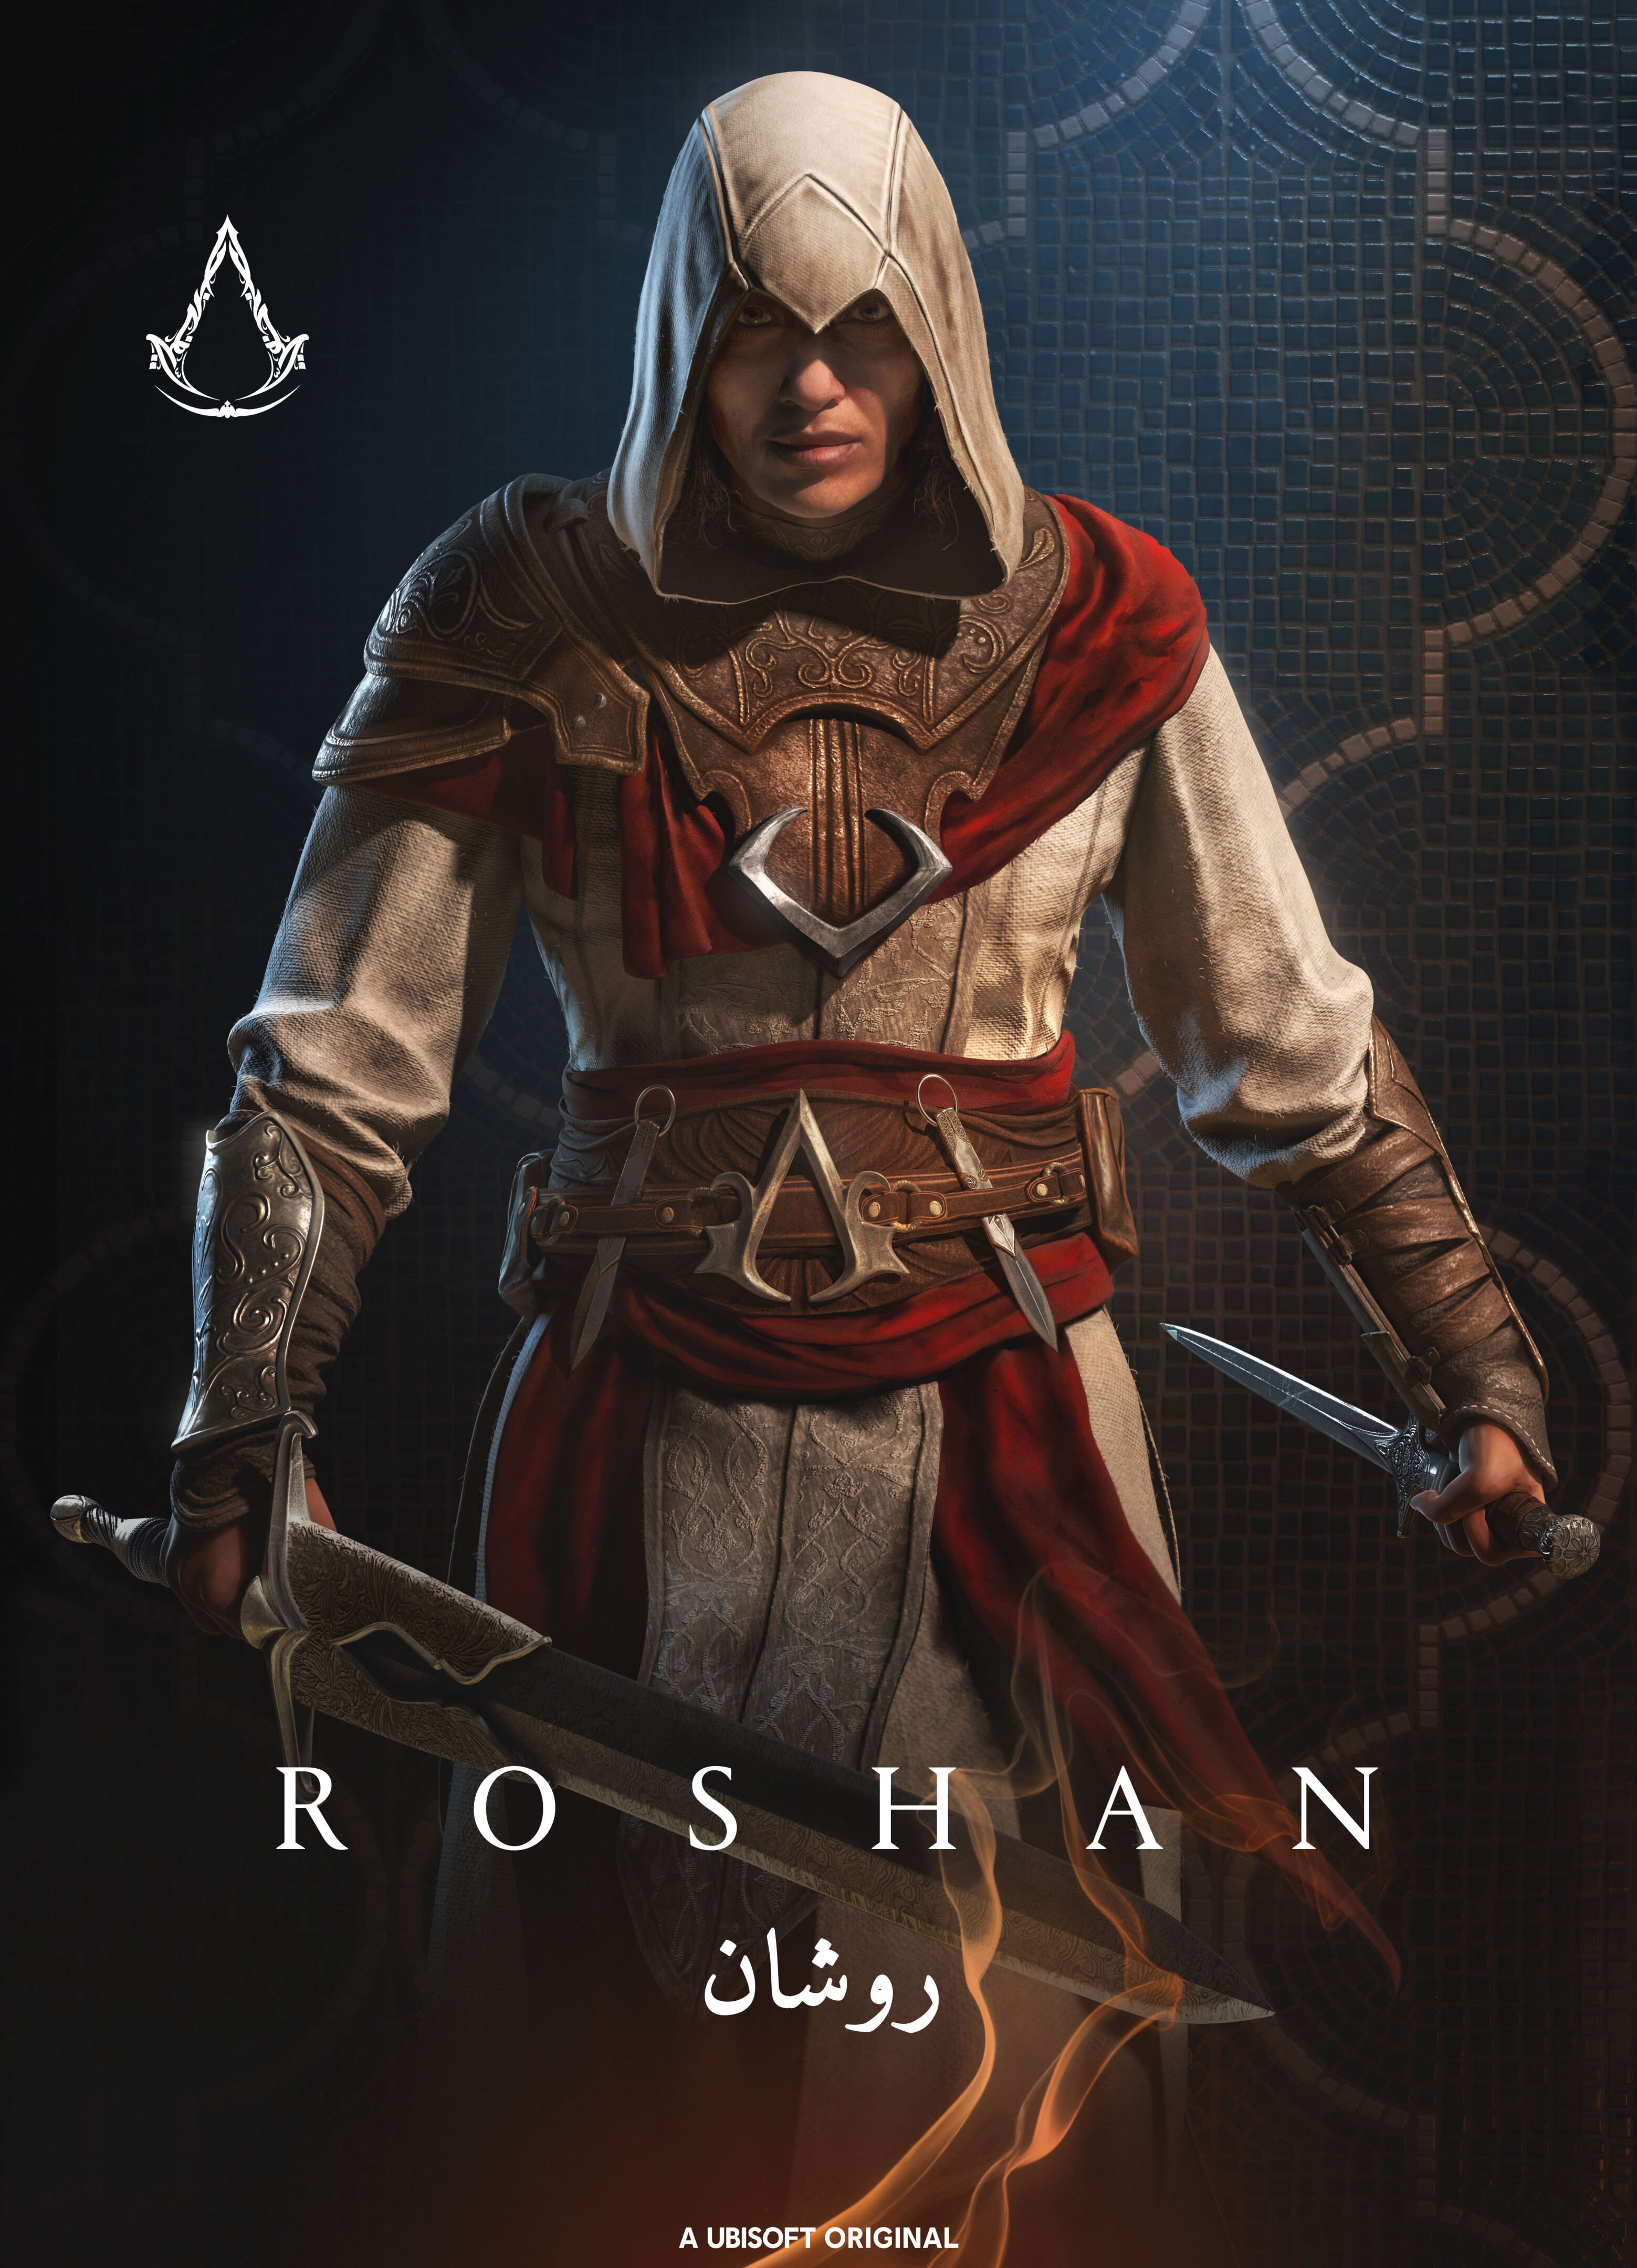 Assassin's Creed: Mirage - PlayStation 5